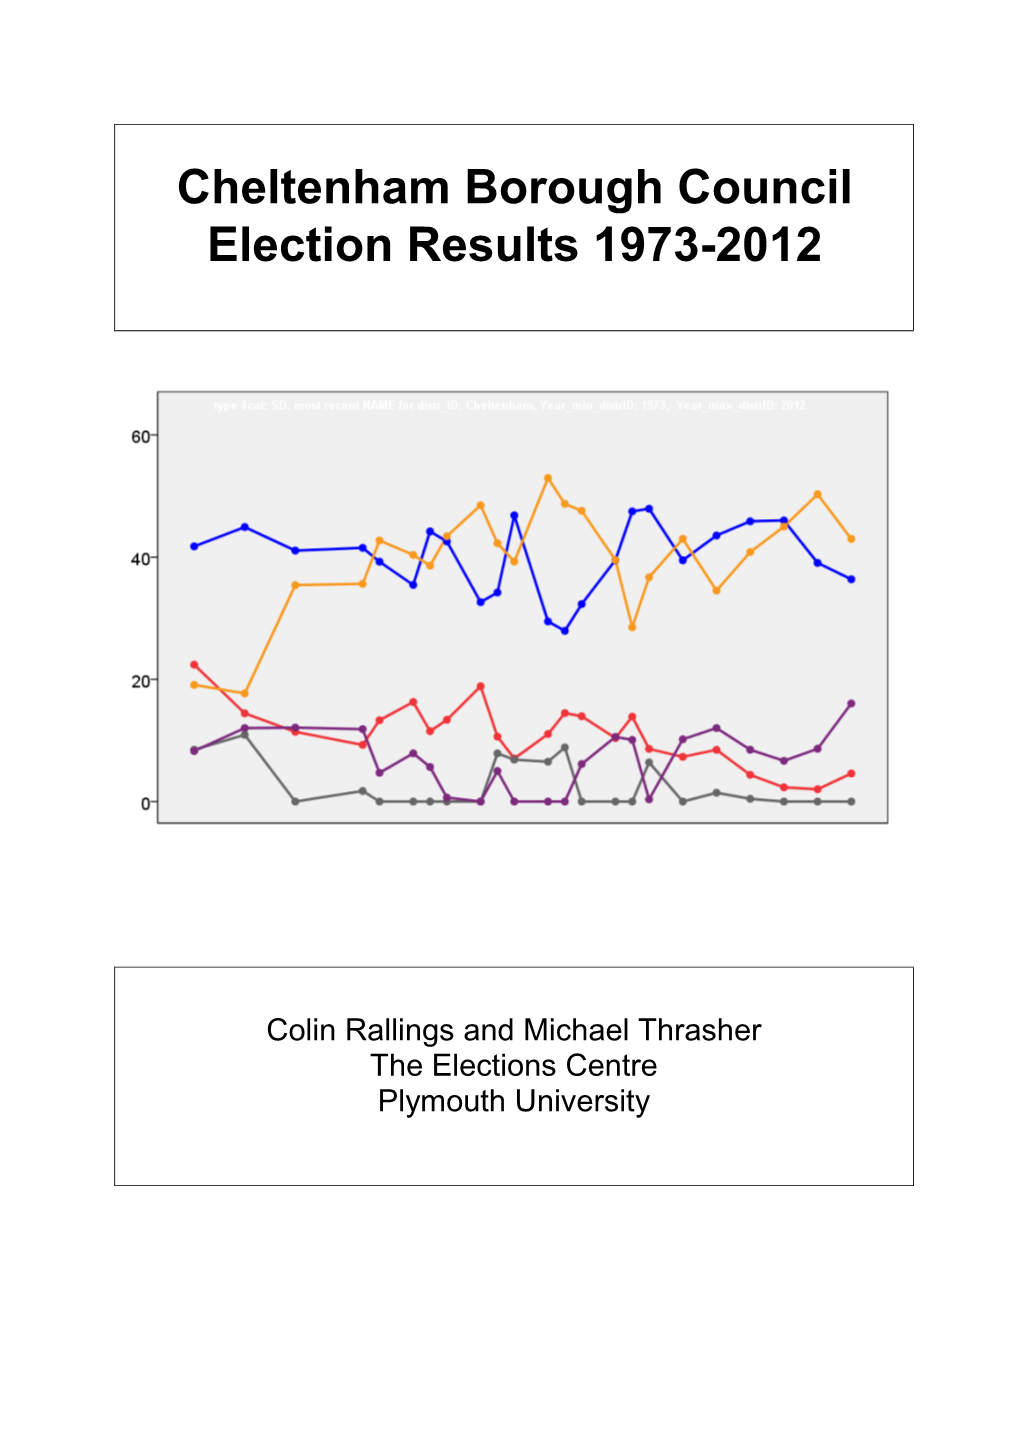 Cheltenham Borough Council Election Results 1973-2012